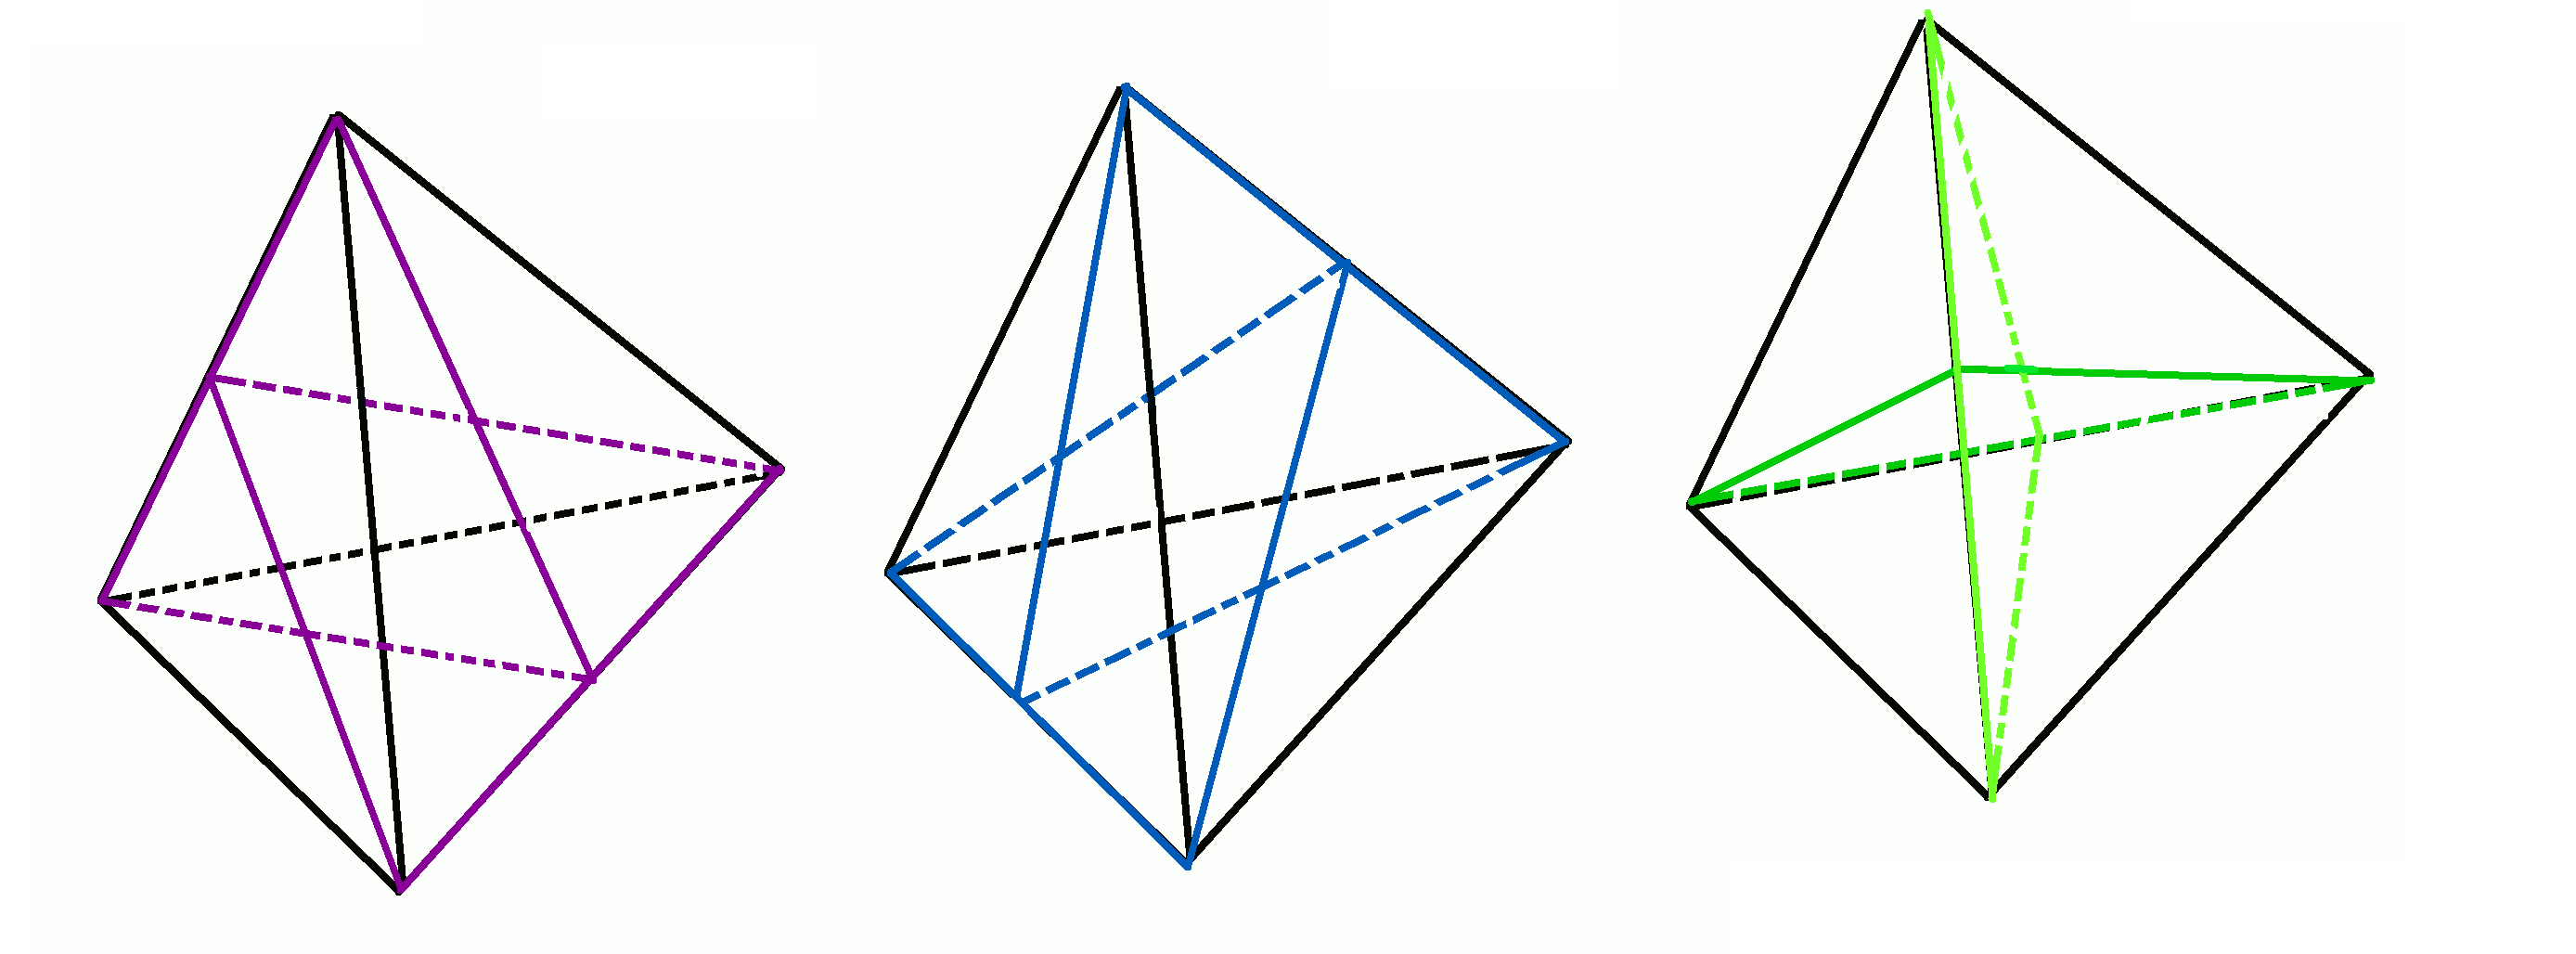 Плоскости октаэдра. Оси симметрии тетраэдра. Плоскость симметрии правильного тетраэдра. Плоскости симметрии тетраэдра. Элементы симметрии правильного октаэдра.